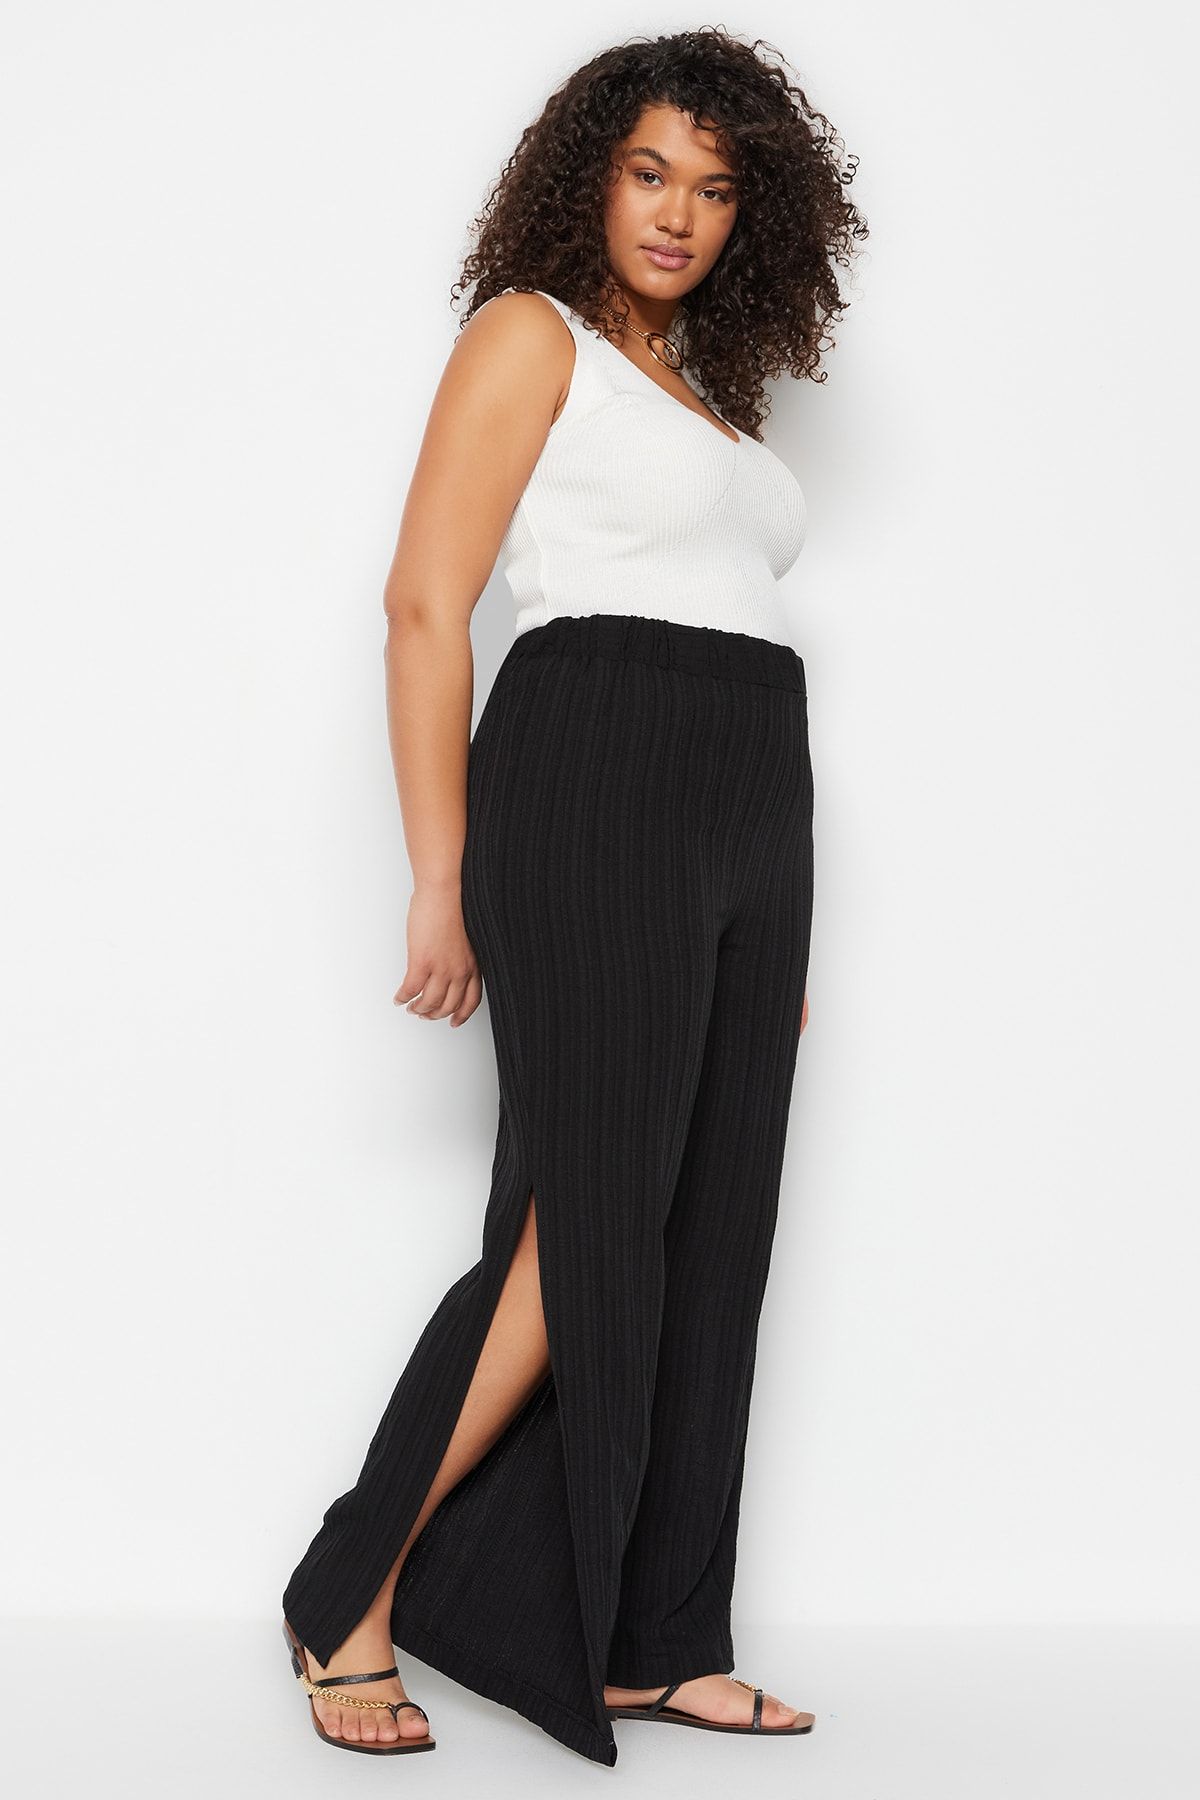 Buy Plus Size Women Black Colour Formal Pants 36 at Amazonin